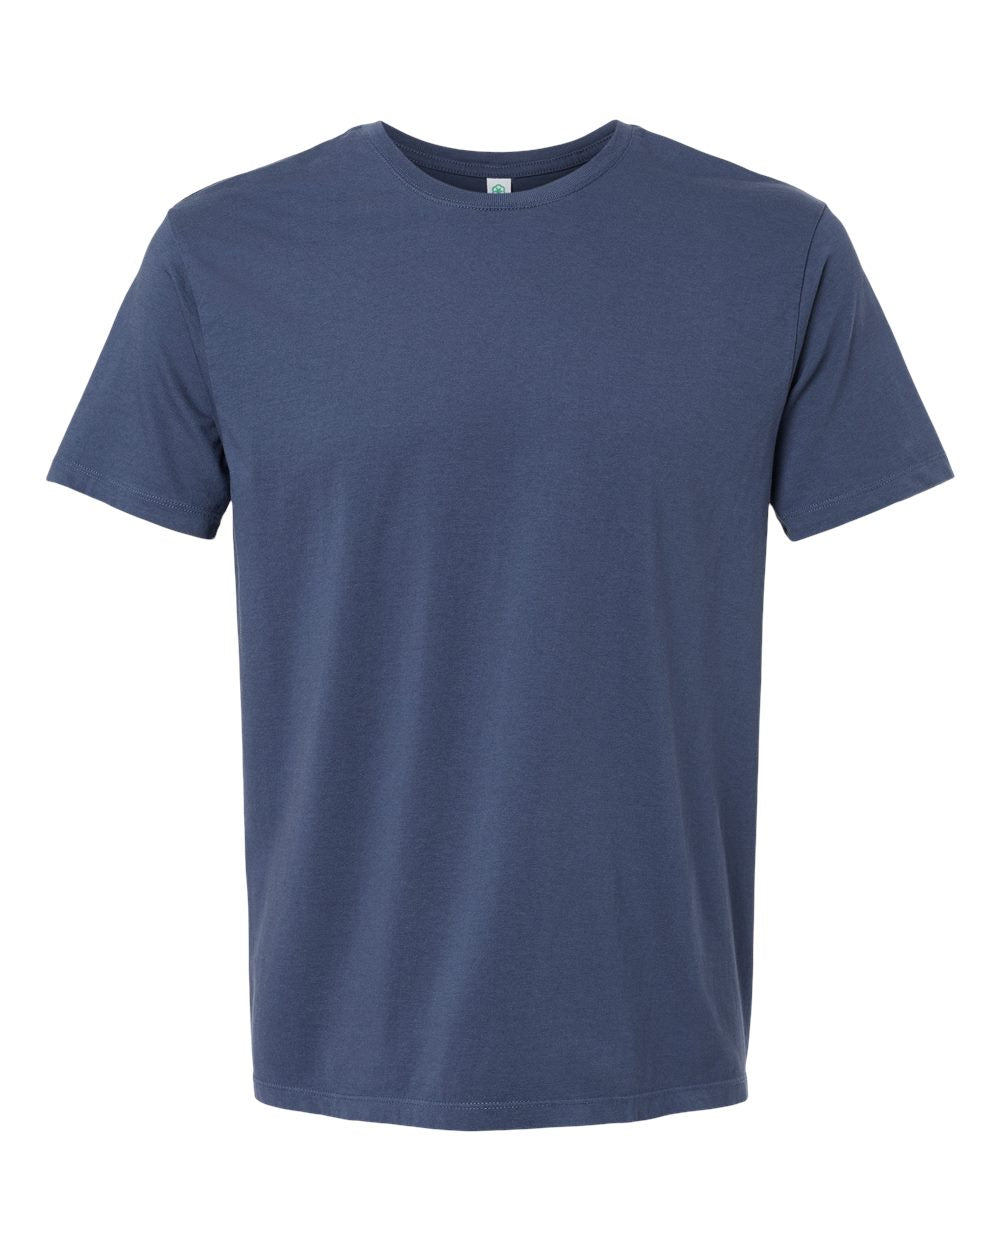 Softshirts® Unisex Organic Cotton T-shirt in navy